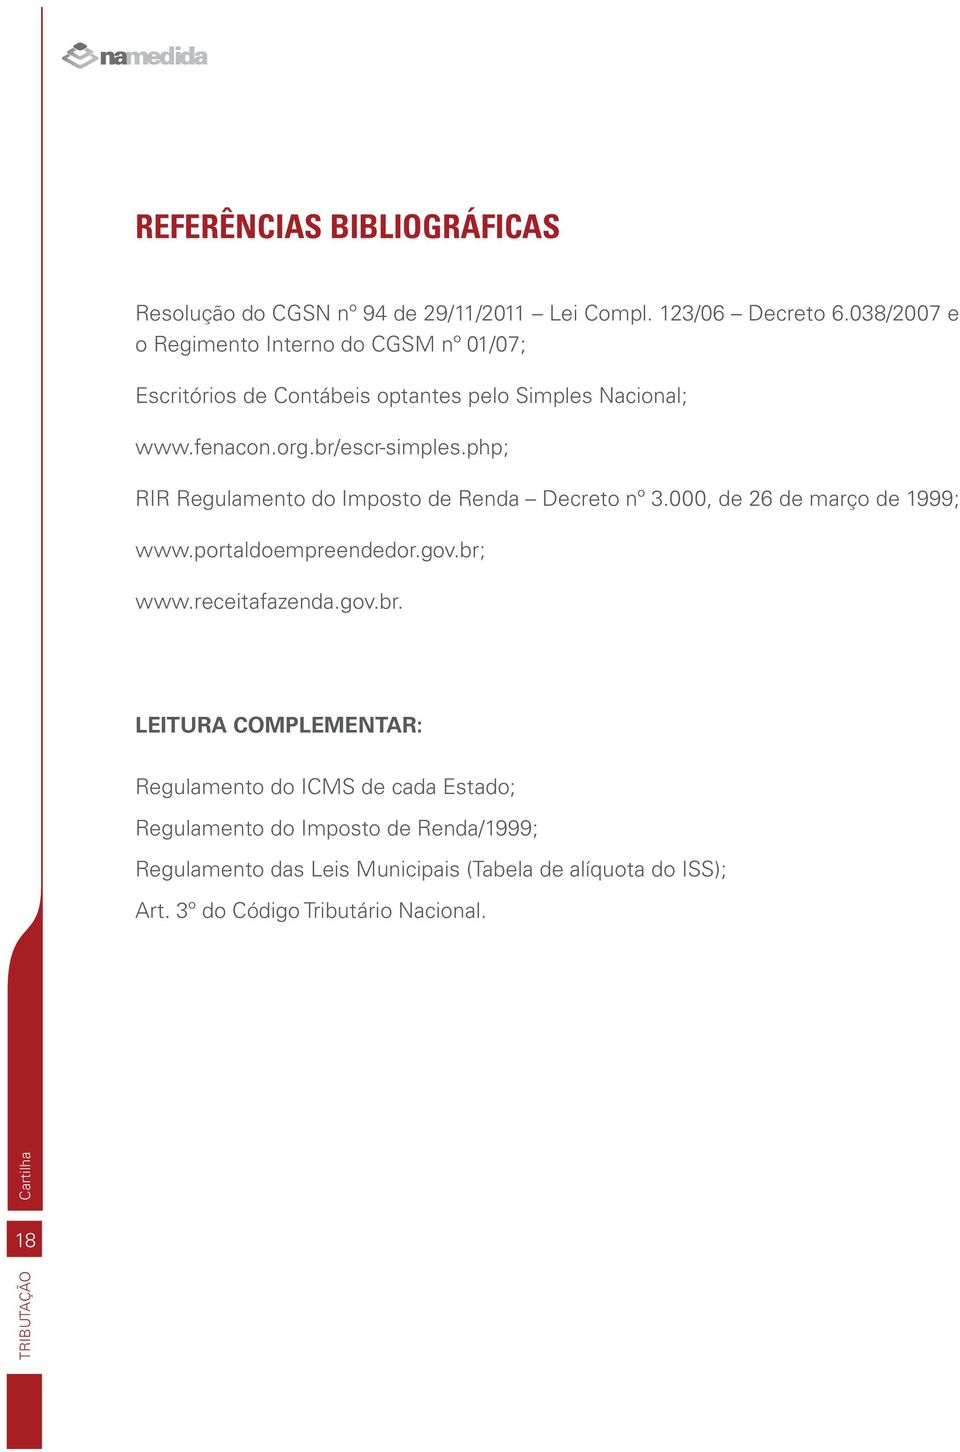 php; RIR Regulamento do Imposto de Renda Decreto nº 3.000, de 26 de março de 1999; www.portaldoempreendedor.gov.br;